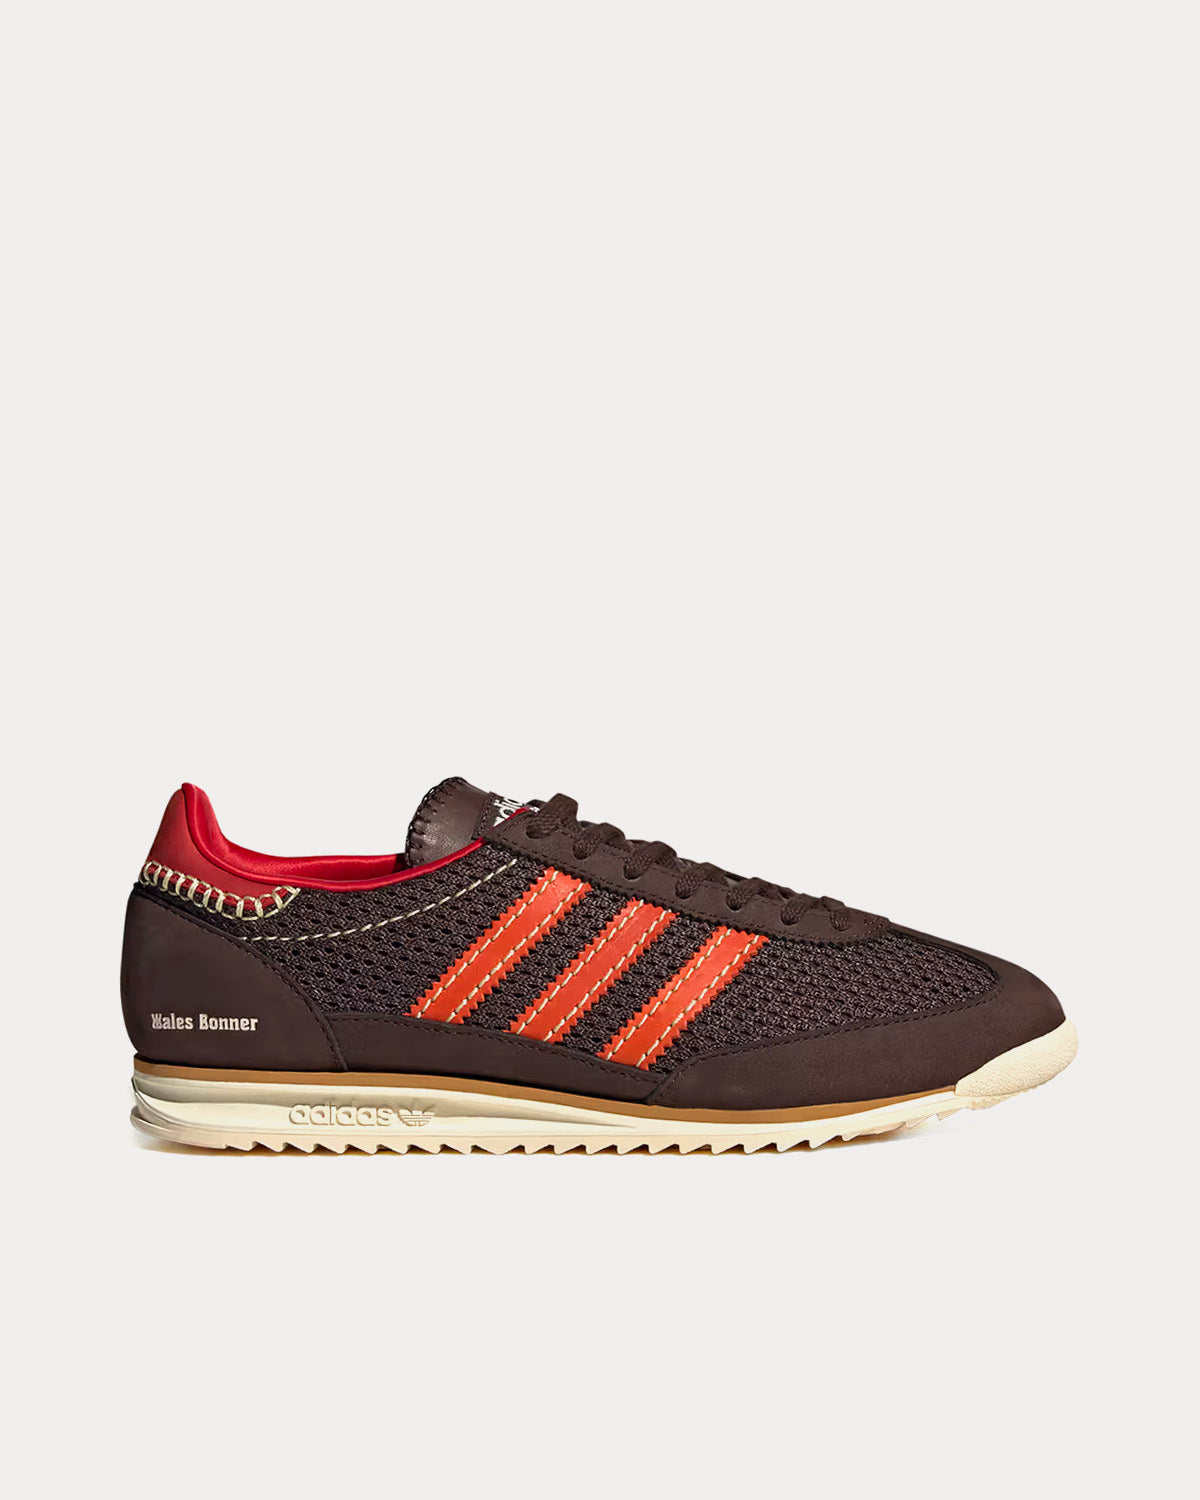 Adidas x Wales Bonner - SL72 Knit Brown Low Top Sneakers